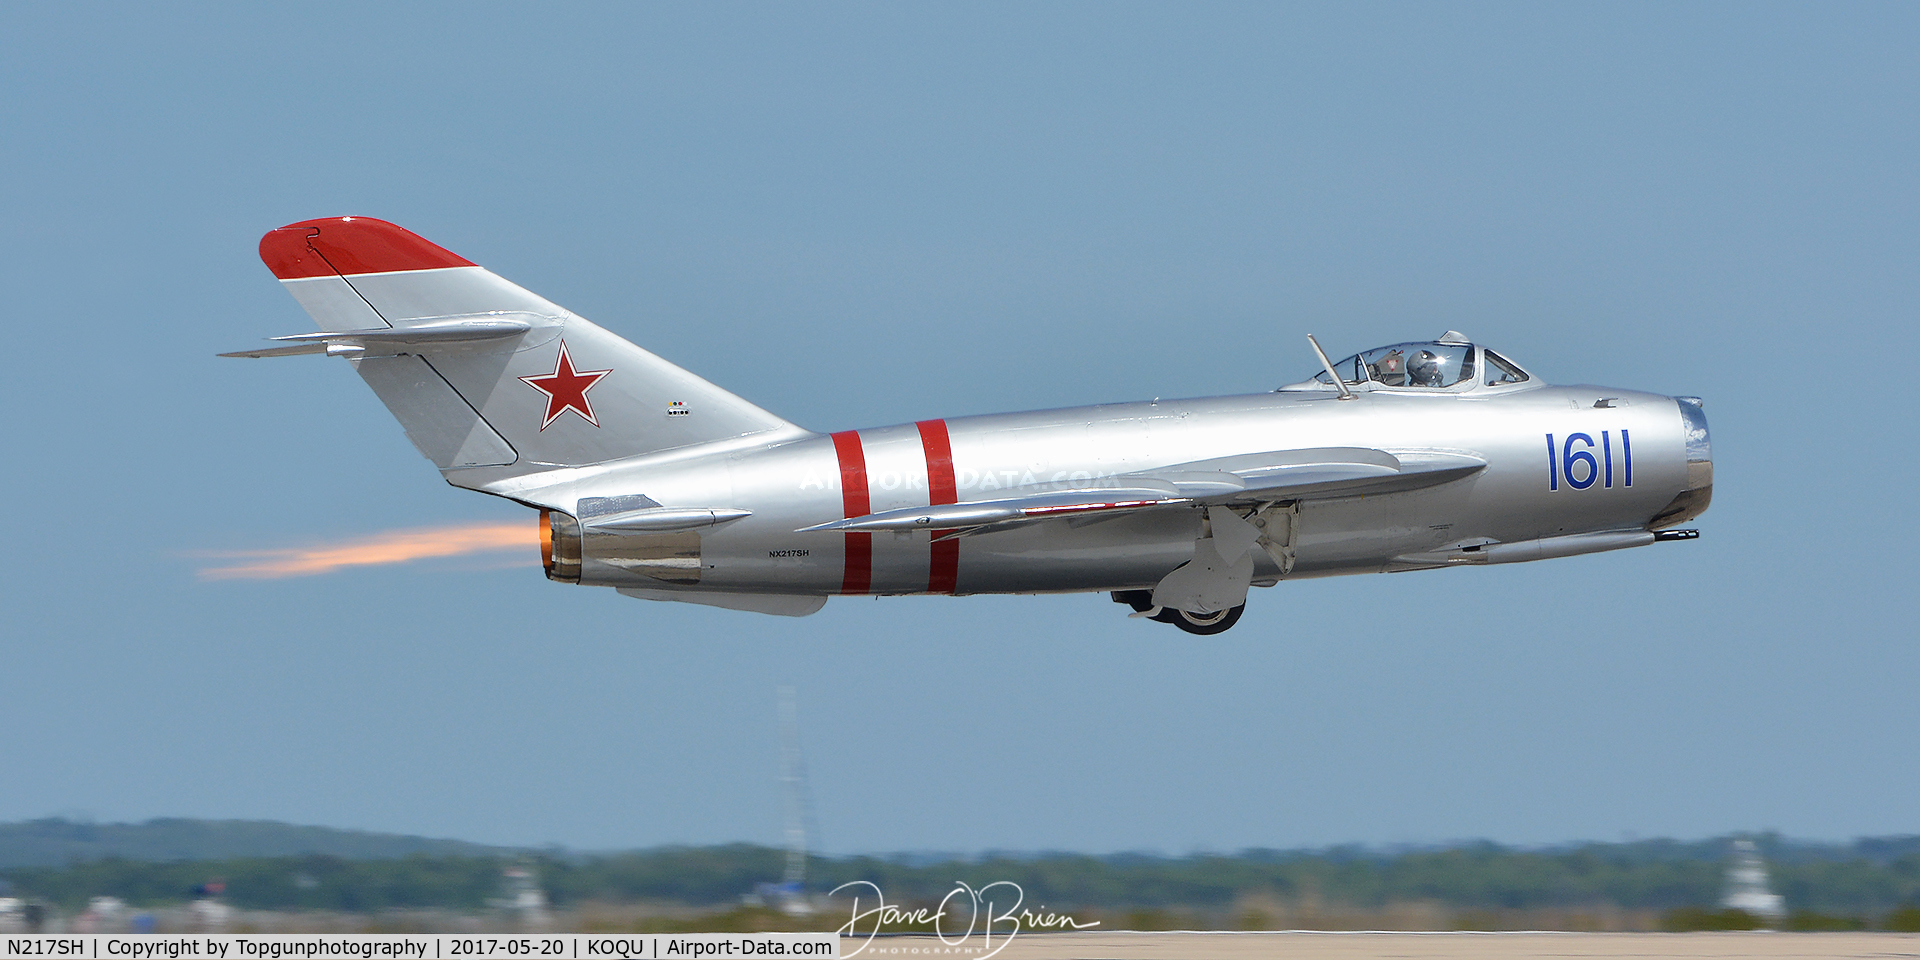 N217SH, 1959 PZL-Mielec Lim-5 (MiG-17F) C/N 1C1611, Randy Ball departs in his MIG 17